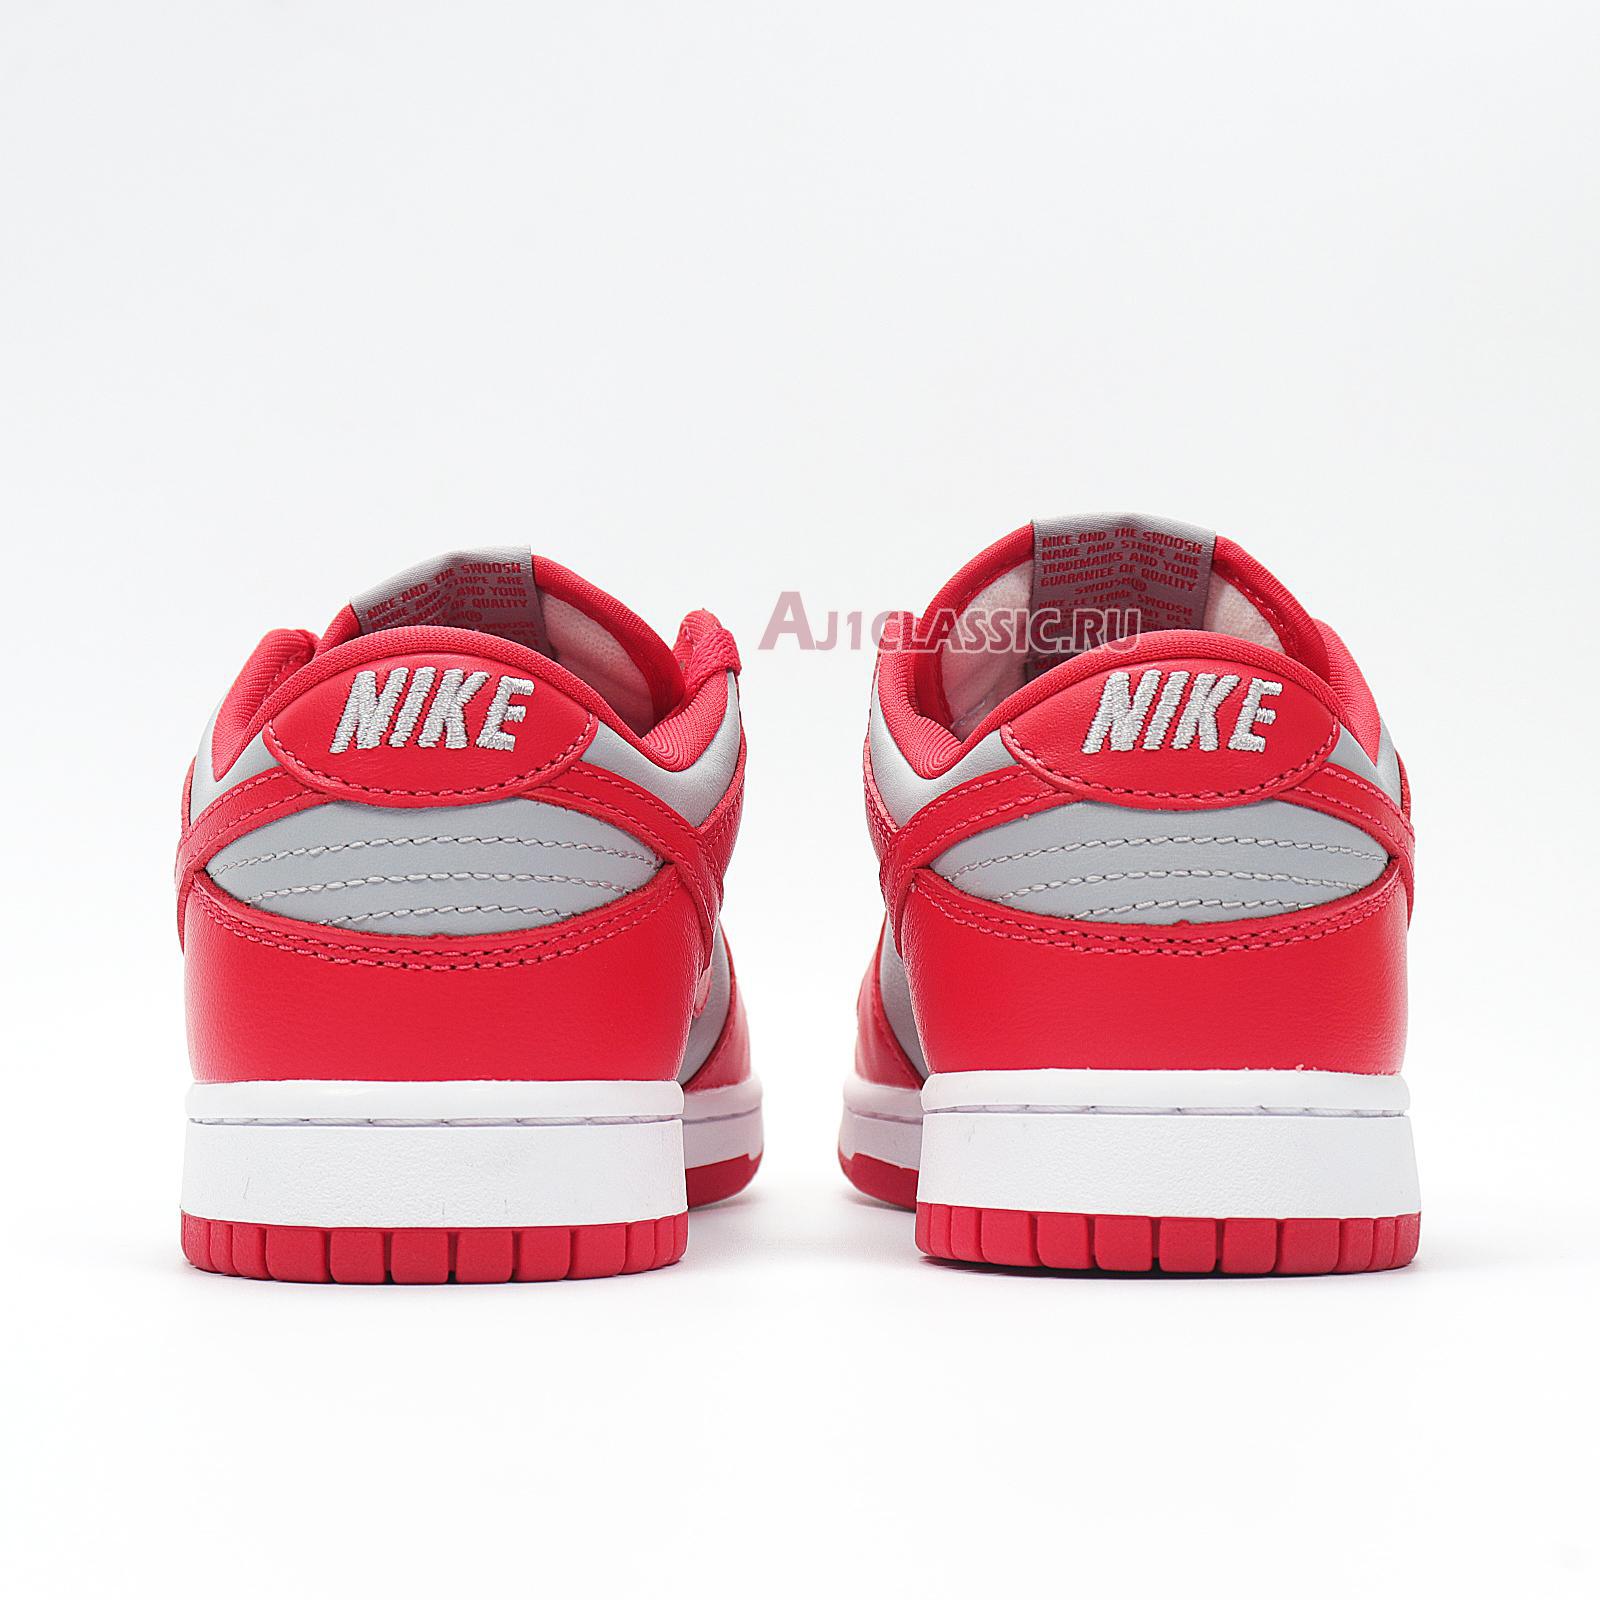 Nike SB Dunk Low "Red Grey" CU1726-600